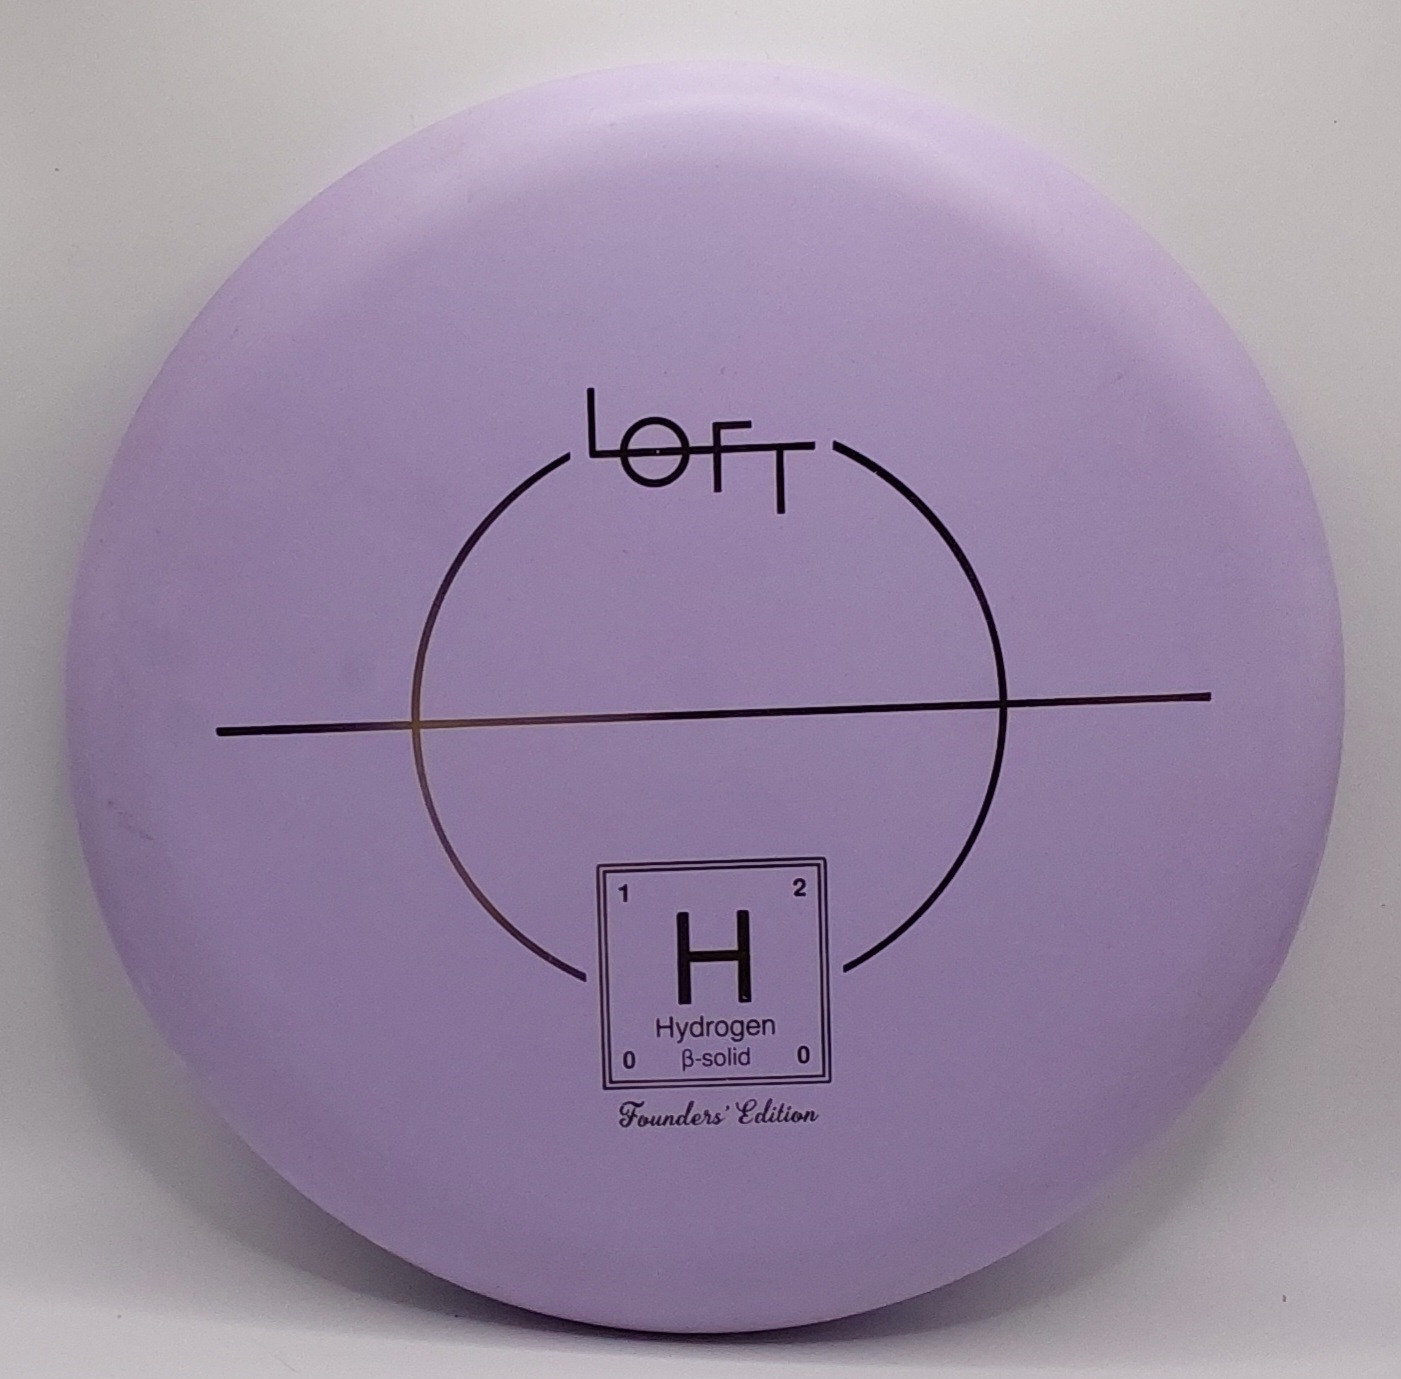 Loft b-solid Hydrogen